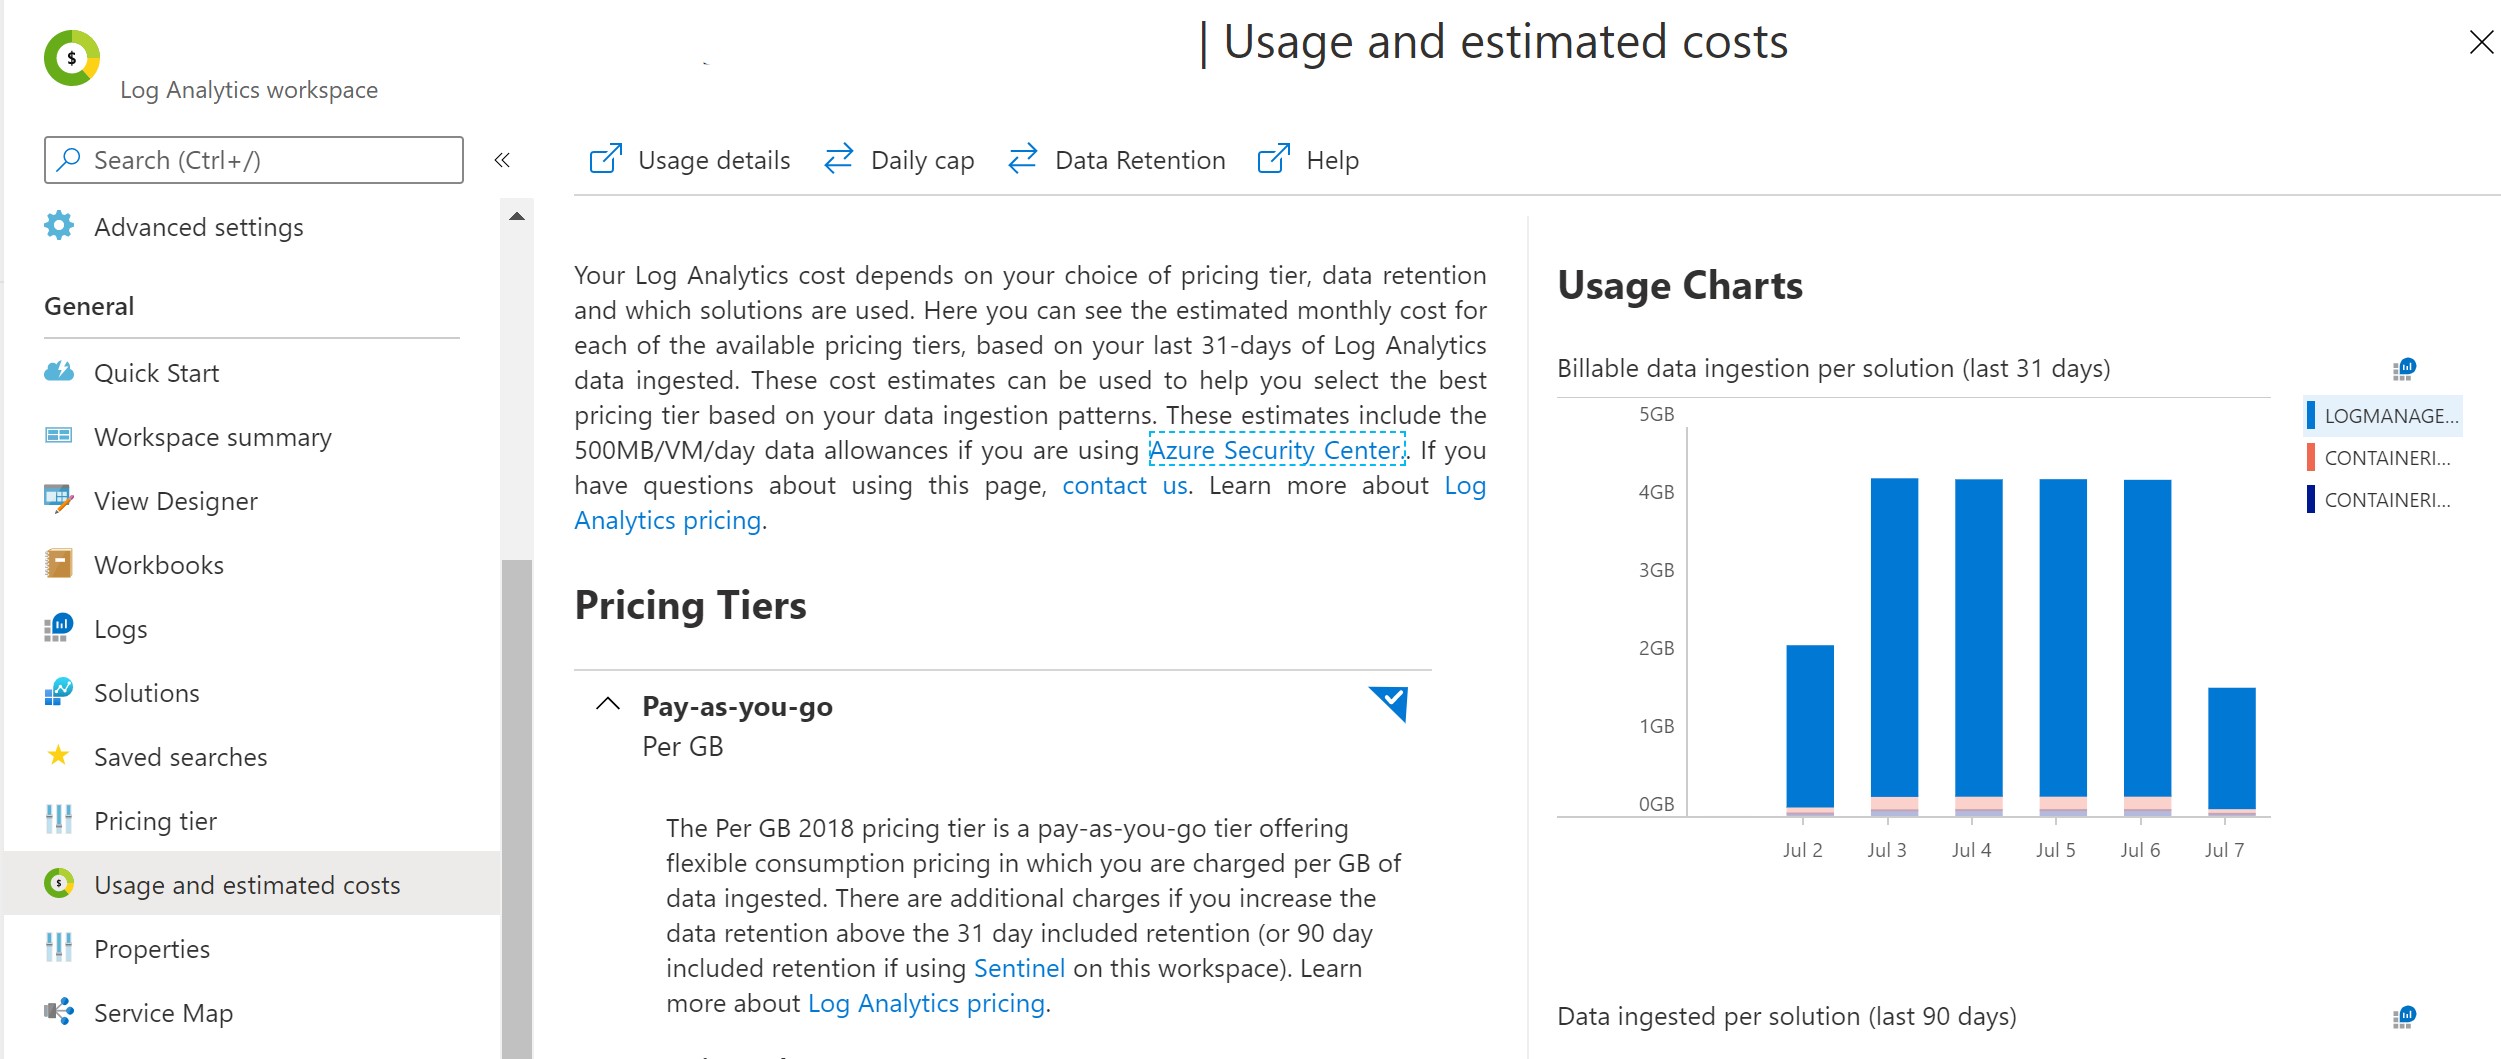 Azure Log Analytics Usage and estimated costs 80%